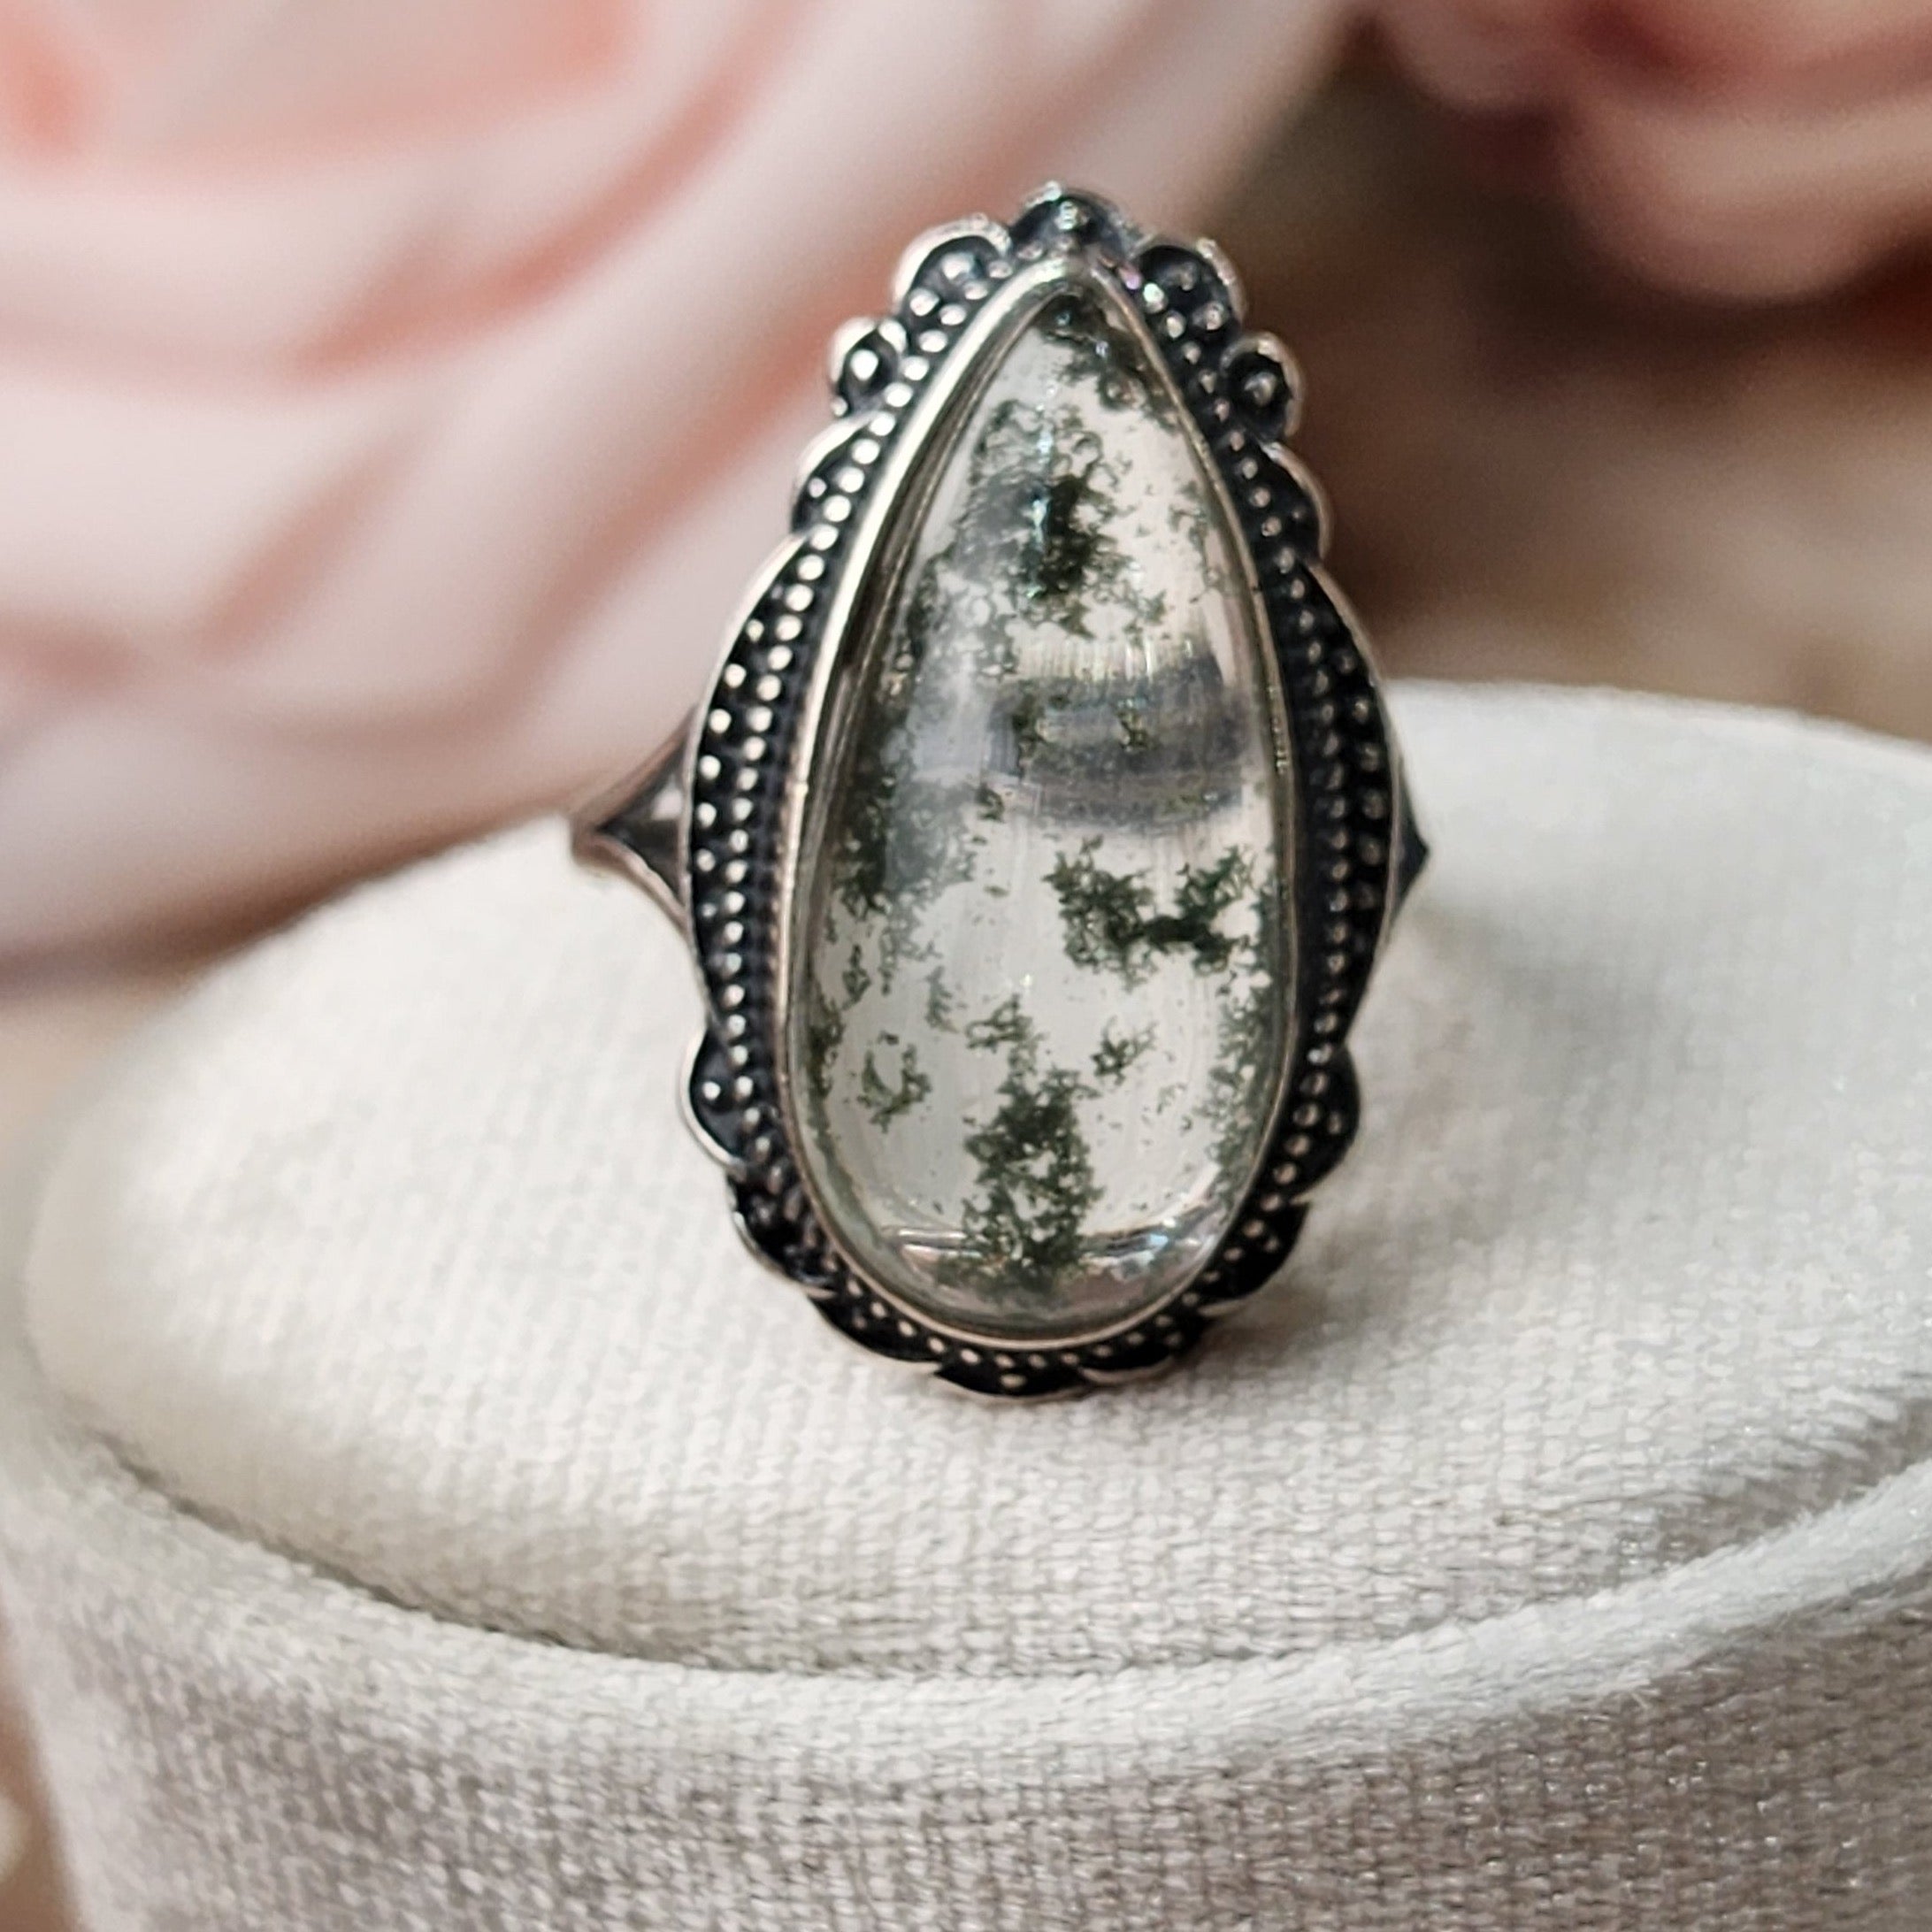 Garden Quartz Vintage Style Adjustable Ring .925 Sterling Silver for Insight, Meditation & Shamanic Journey